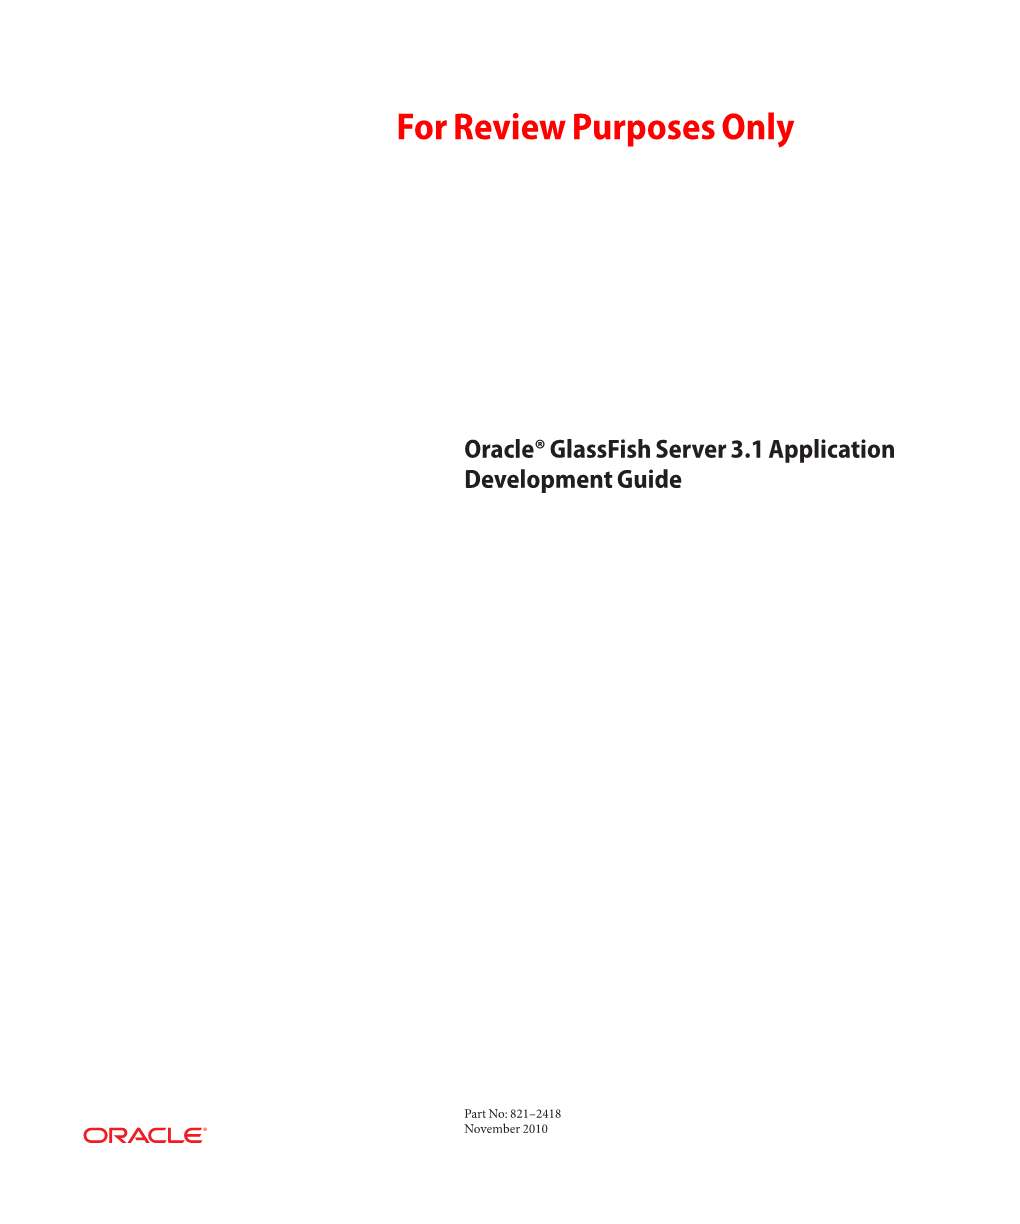 Oracle Glassfish Server 3.1 Application Development Guide • November 2010 Preface